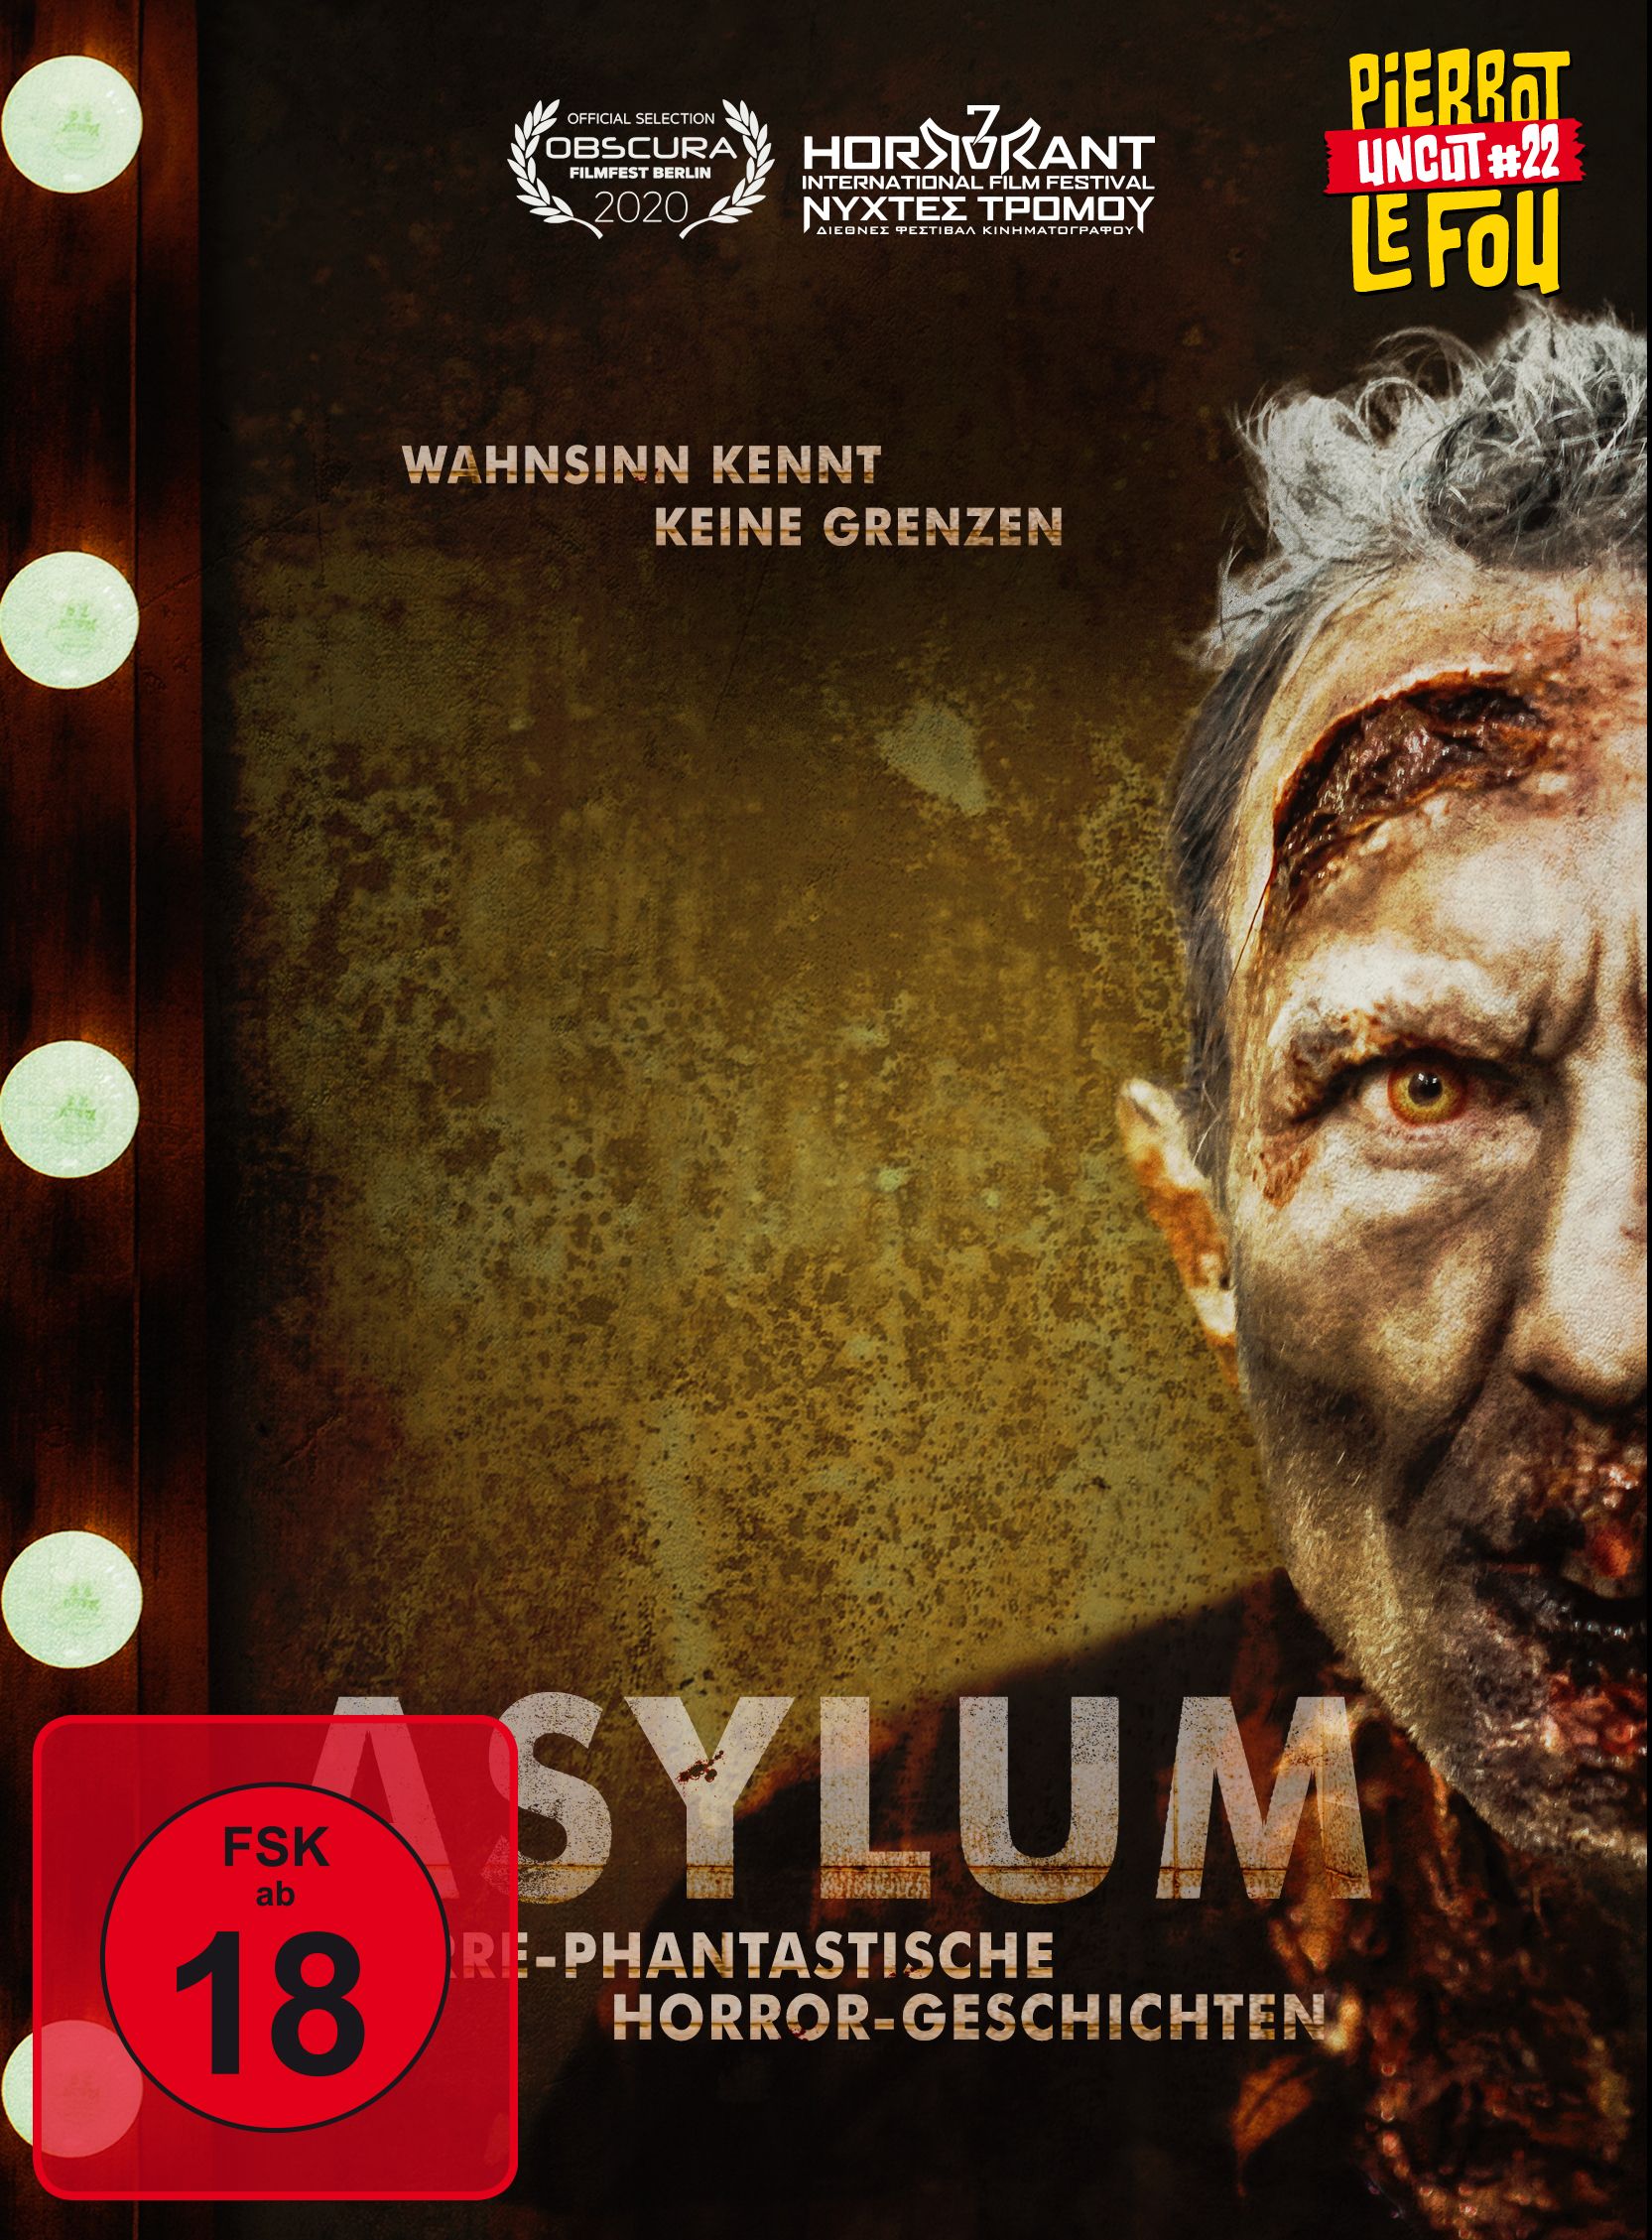 Asylum - Irre-phantastische Horror-Geschichten - Limited Edition Mediabook (uncut) (Blu-ray + DVD) - Cover B